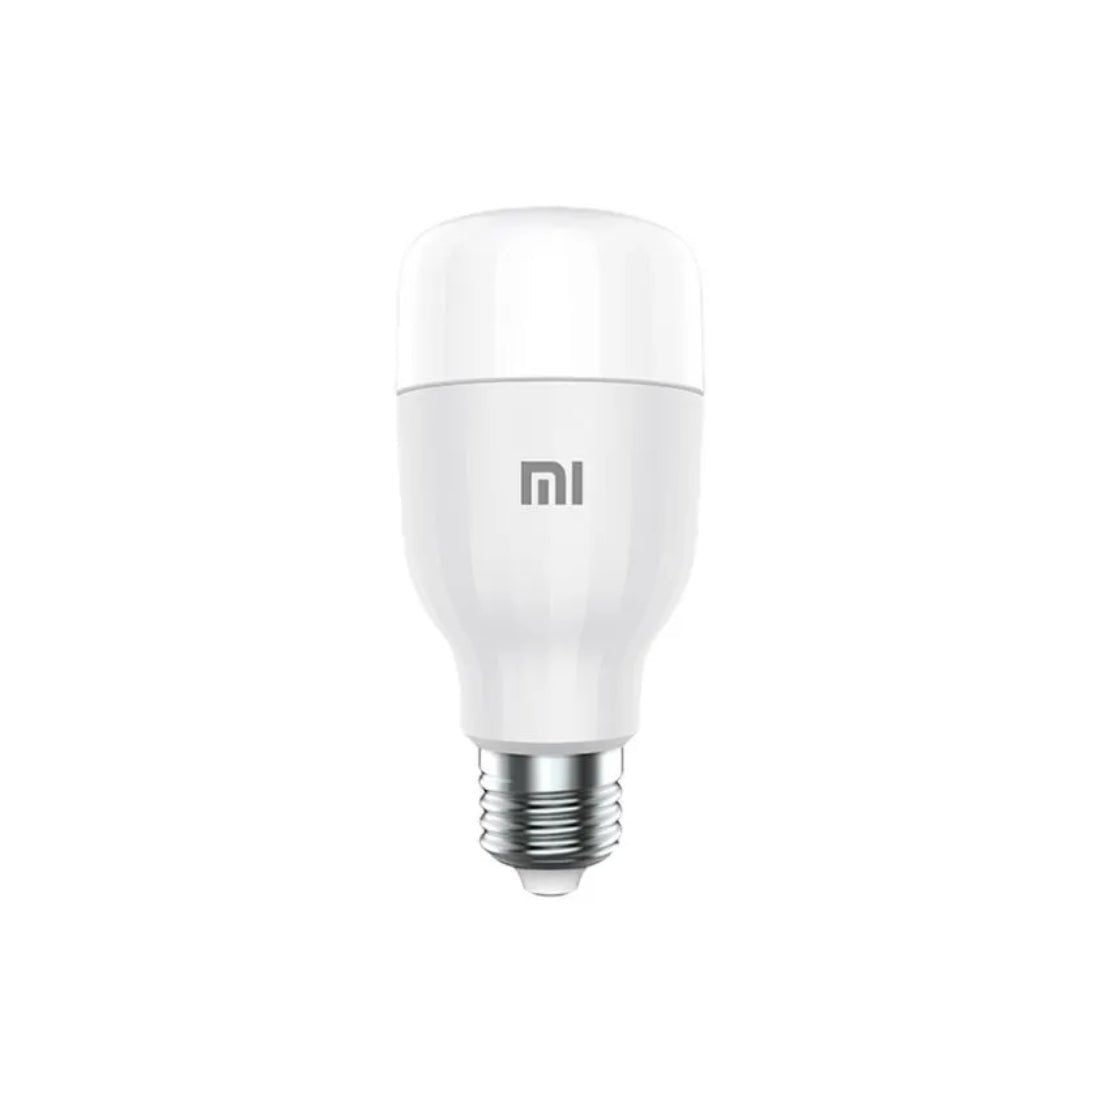 Xiaomi Mi LED Smart LED Bulb Essential - إضاءة - Store 974 | ستور ٩٧٤